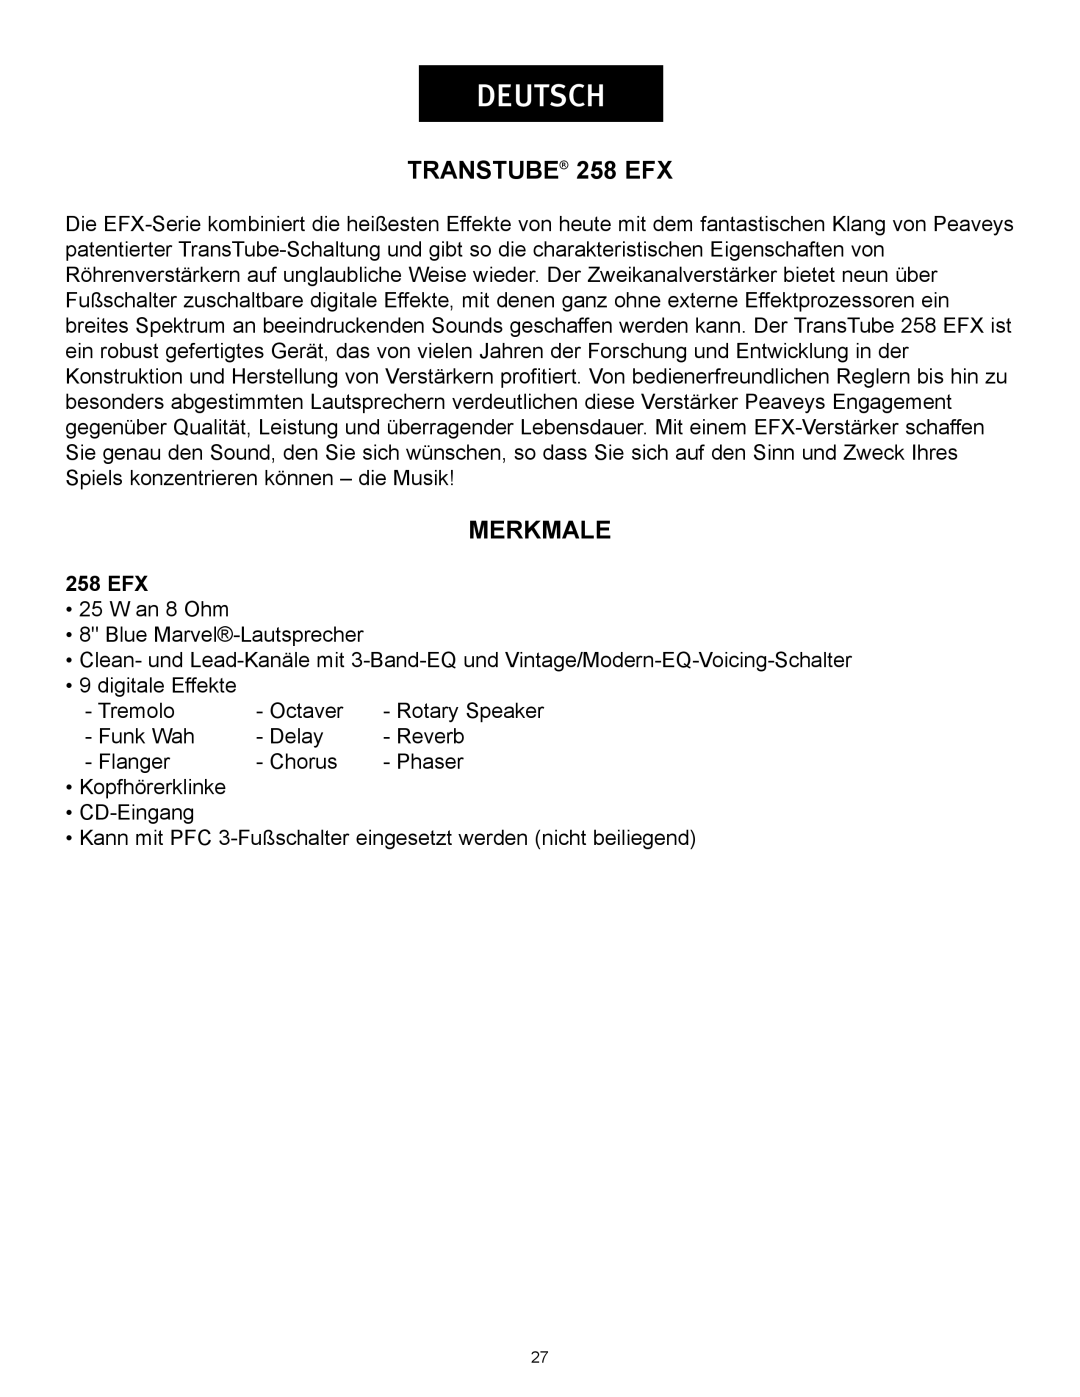 Peavey operation manual Deutsch, Merkmale, TRANSTUBE 258 EFX 